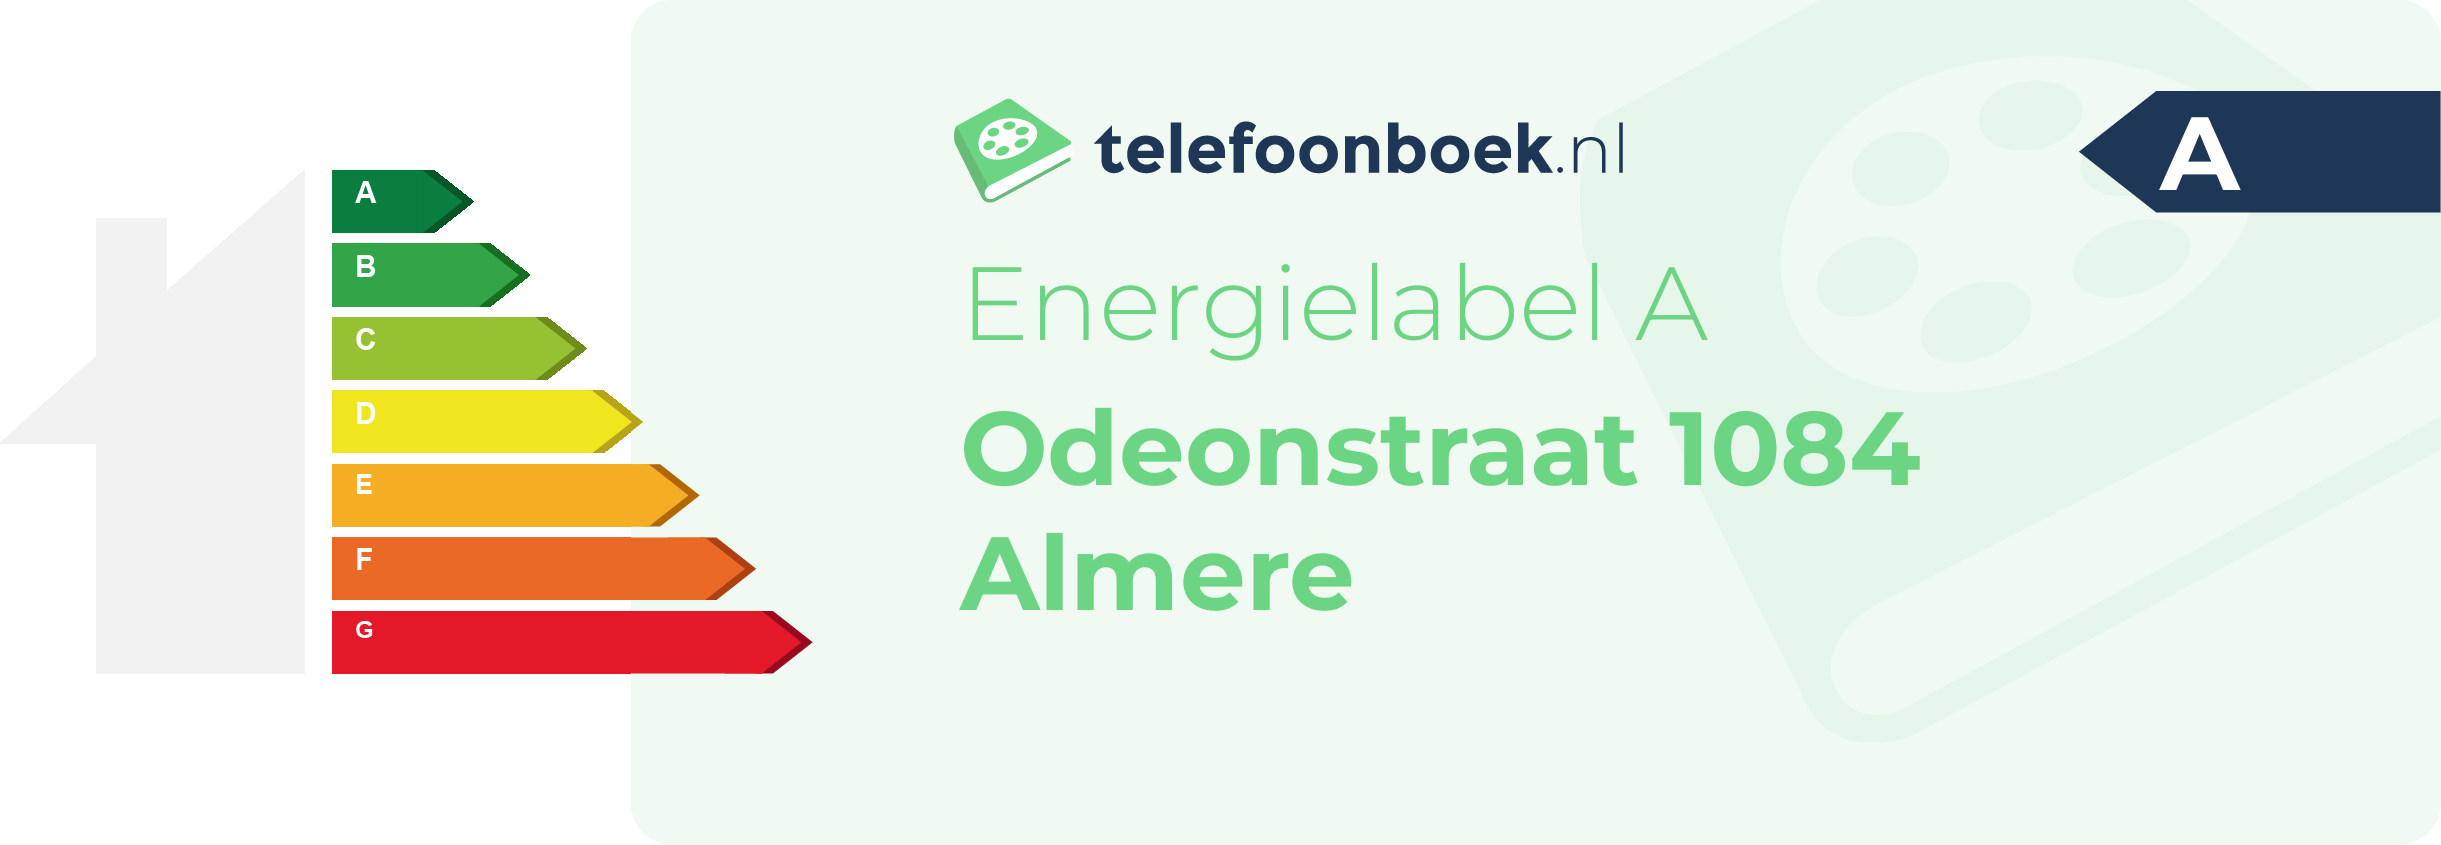 Energielabel Odeonstraat 1084 Almere